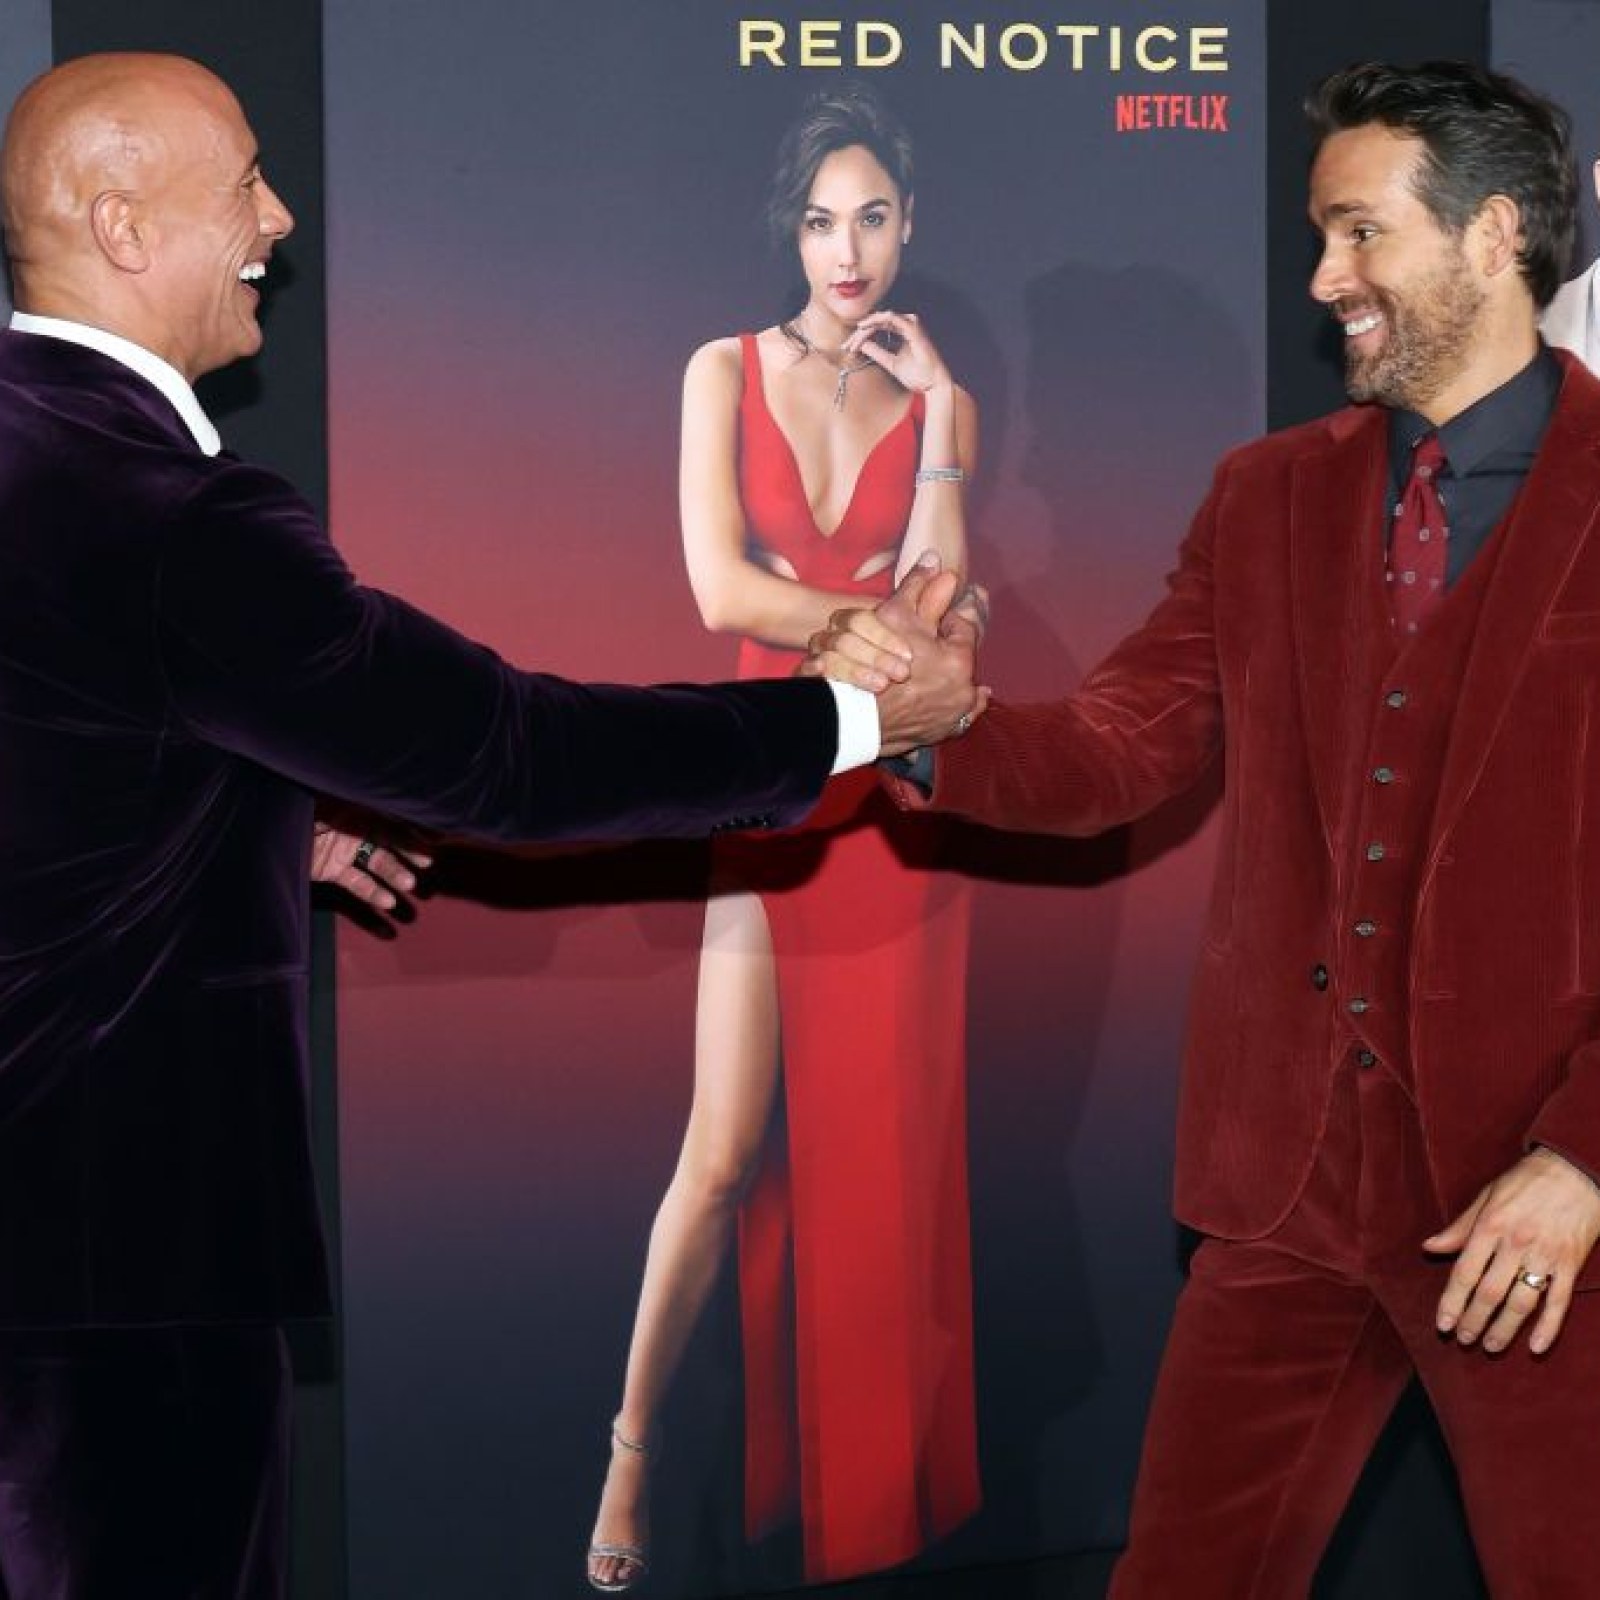 Dwayne Johnson trolls Red Notice co-star Ryan Reynolds with massive  billboard